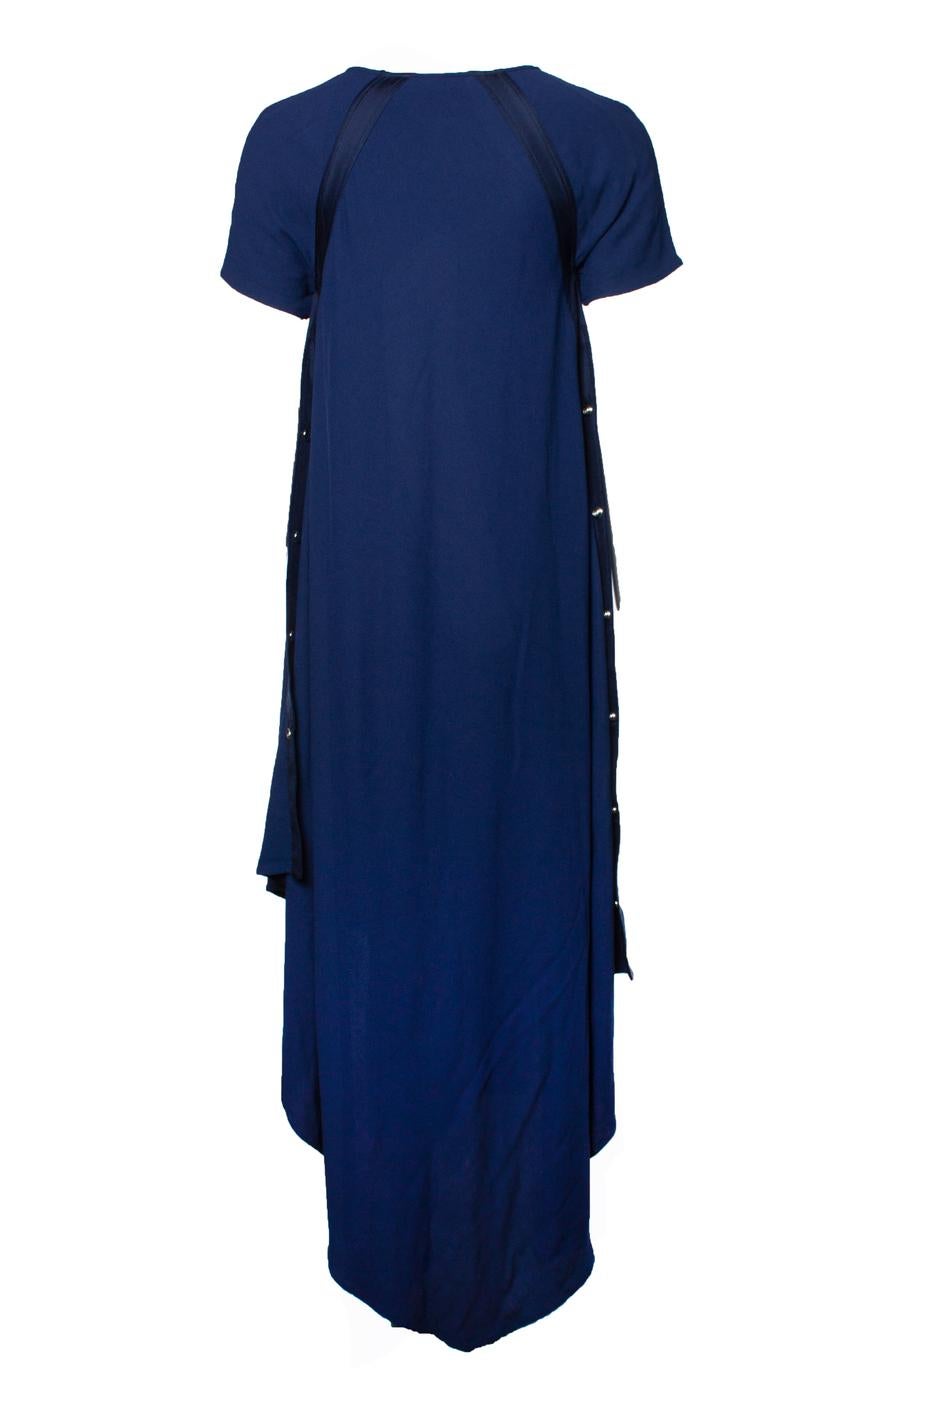 Sies Marjan, Blue asymmetric dress with push buttons. The item is in very good condition.

• CONDITION: very good condition 

• SIZE: 6 - XS 

• MEASUREMENTS: length 128  cm, width 47 cm, waist 83 cm, shoulder width 45 cm, arm length 15 cm

•